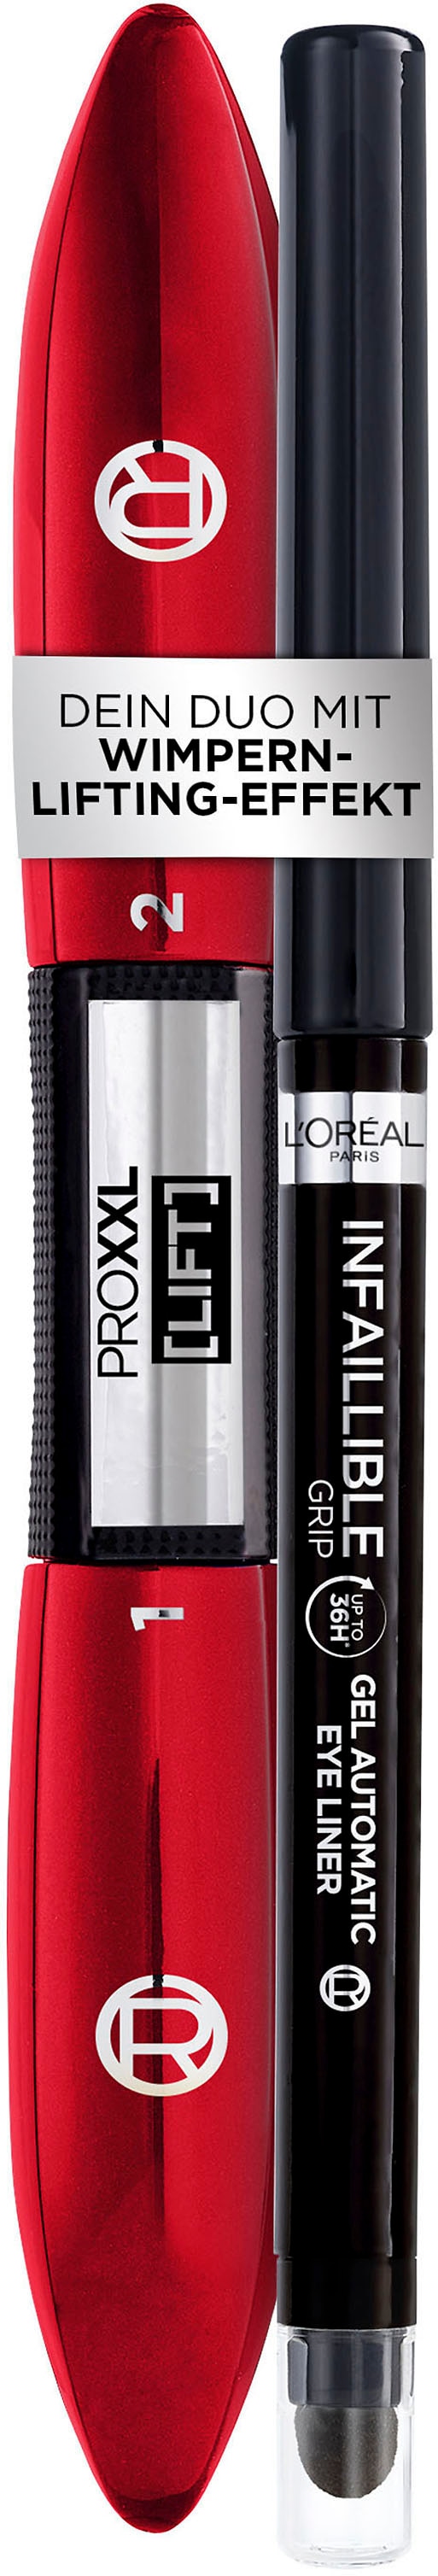 L'ORÉAL PARIS Schmink-Set »L'Oréal Paris Intensive Blicke: Mascara + Liner«, (Set, 2 tlg.), Make-Up-Set, Mascara, Liner, Wimperntusche, schwunggebend